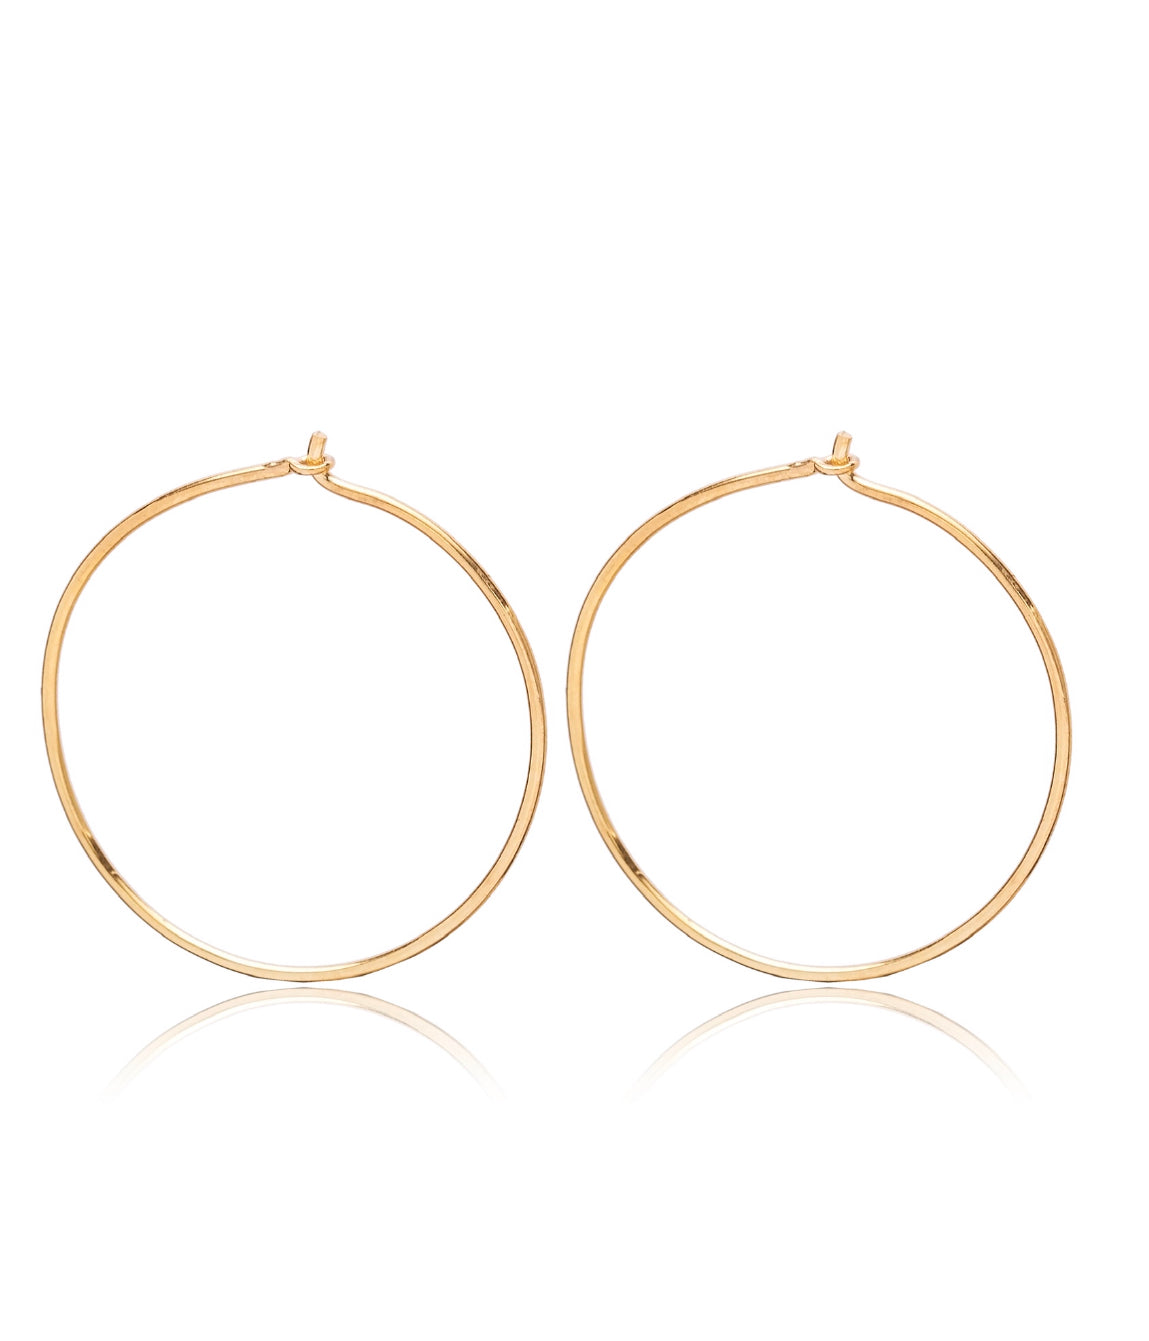 Gold Charm Hoops Earrings